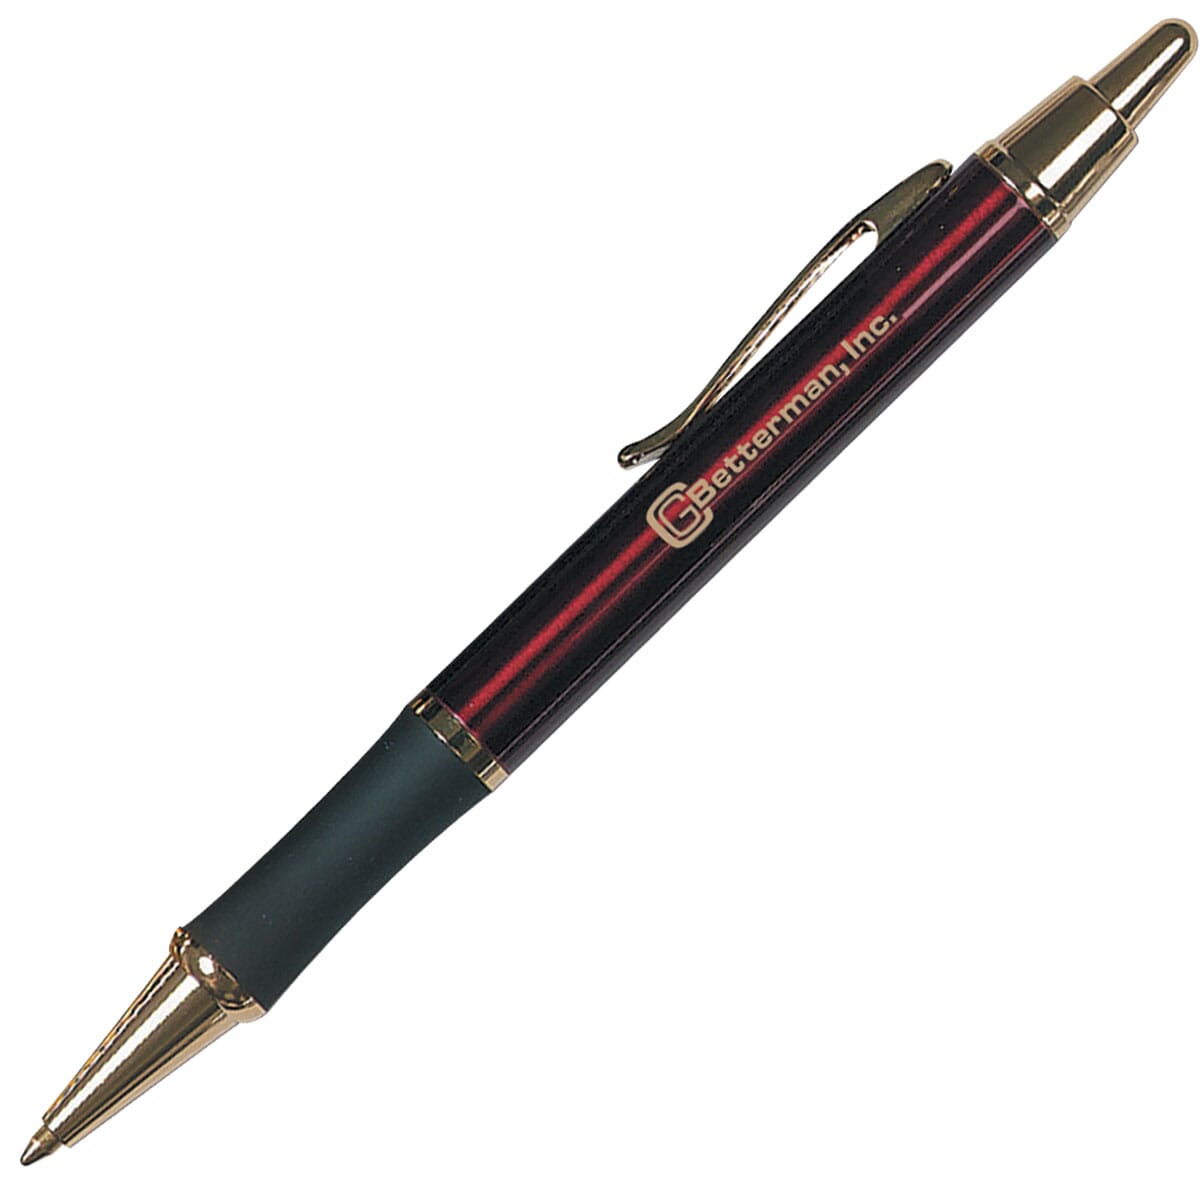 Corporeate Metal pen